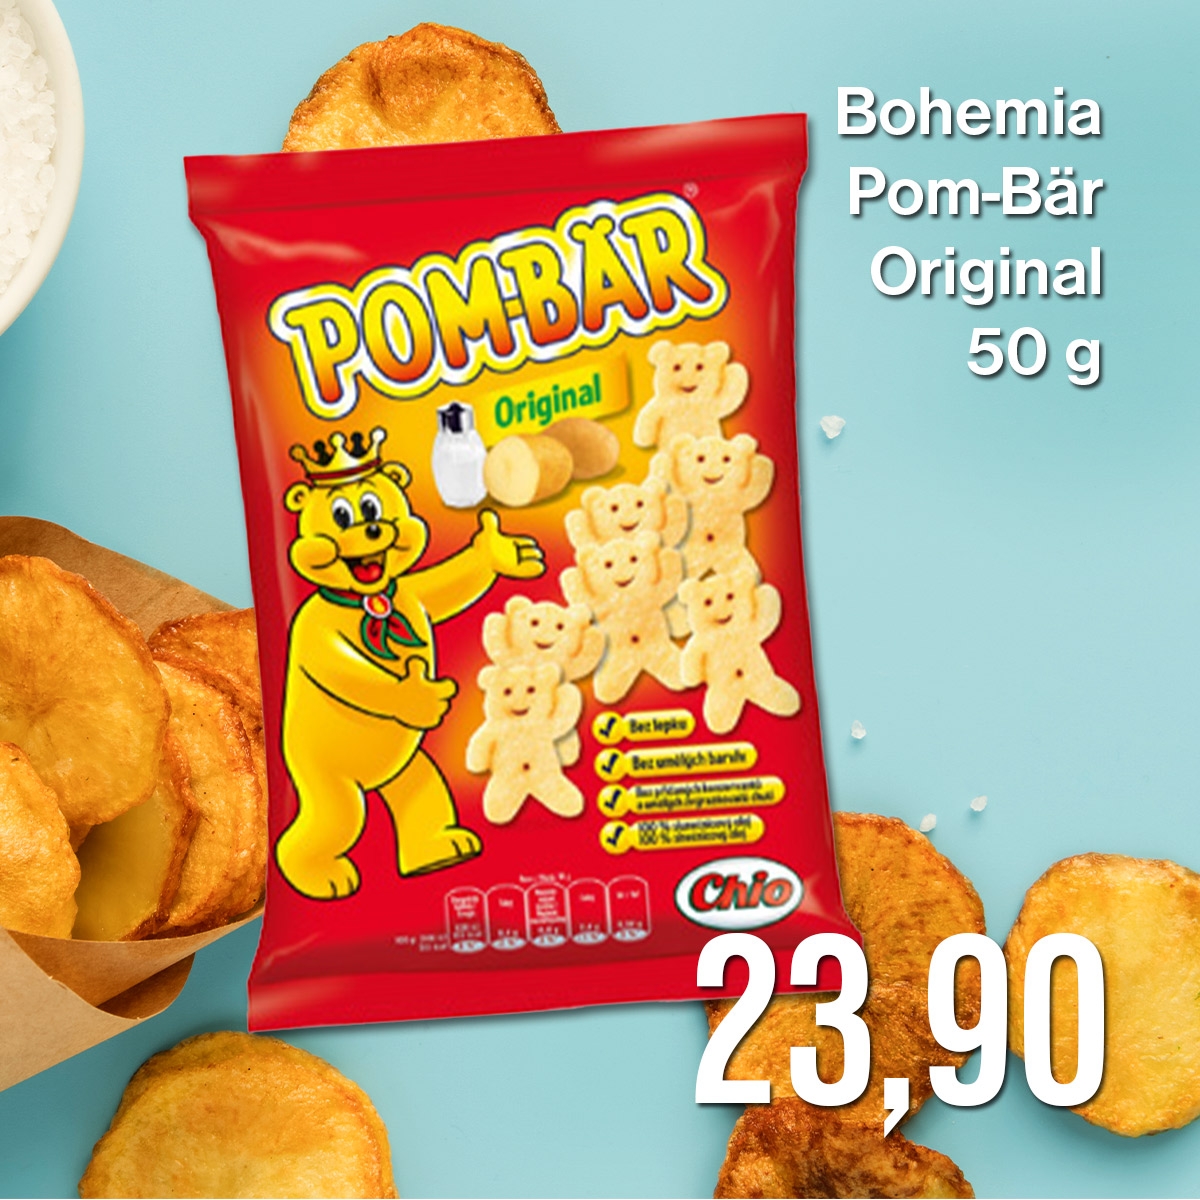 Bohemia Pom-Bär Original 50 g